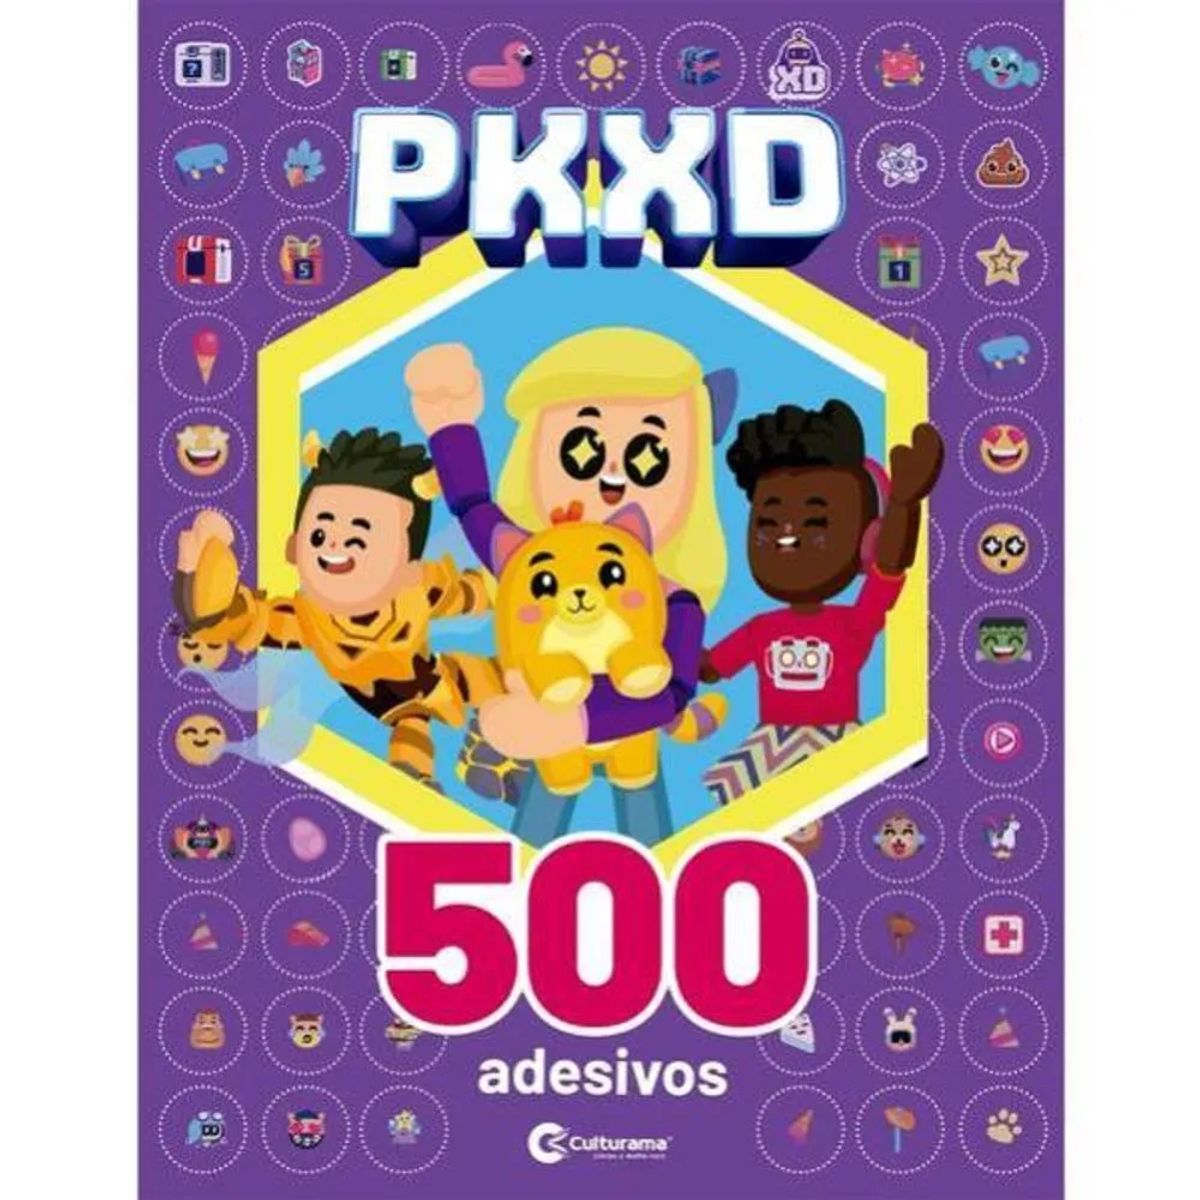 Kit Culturama PKXD com 500 Adesivos image number 0